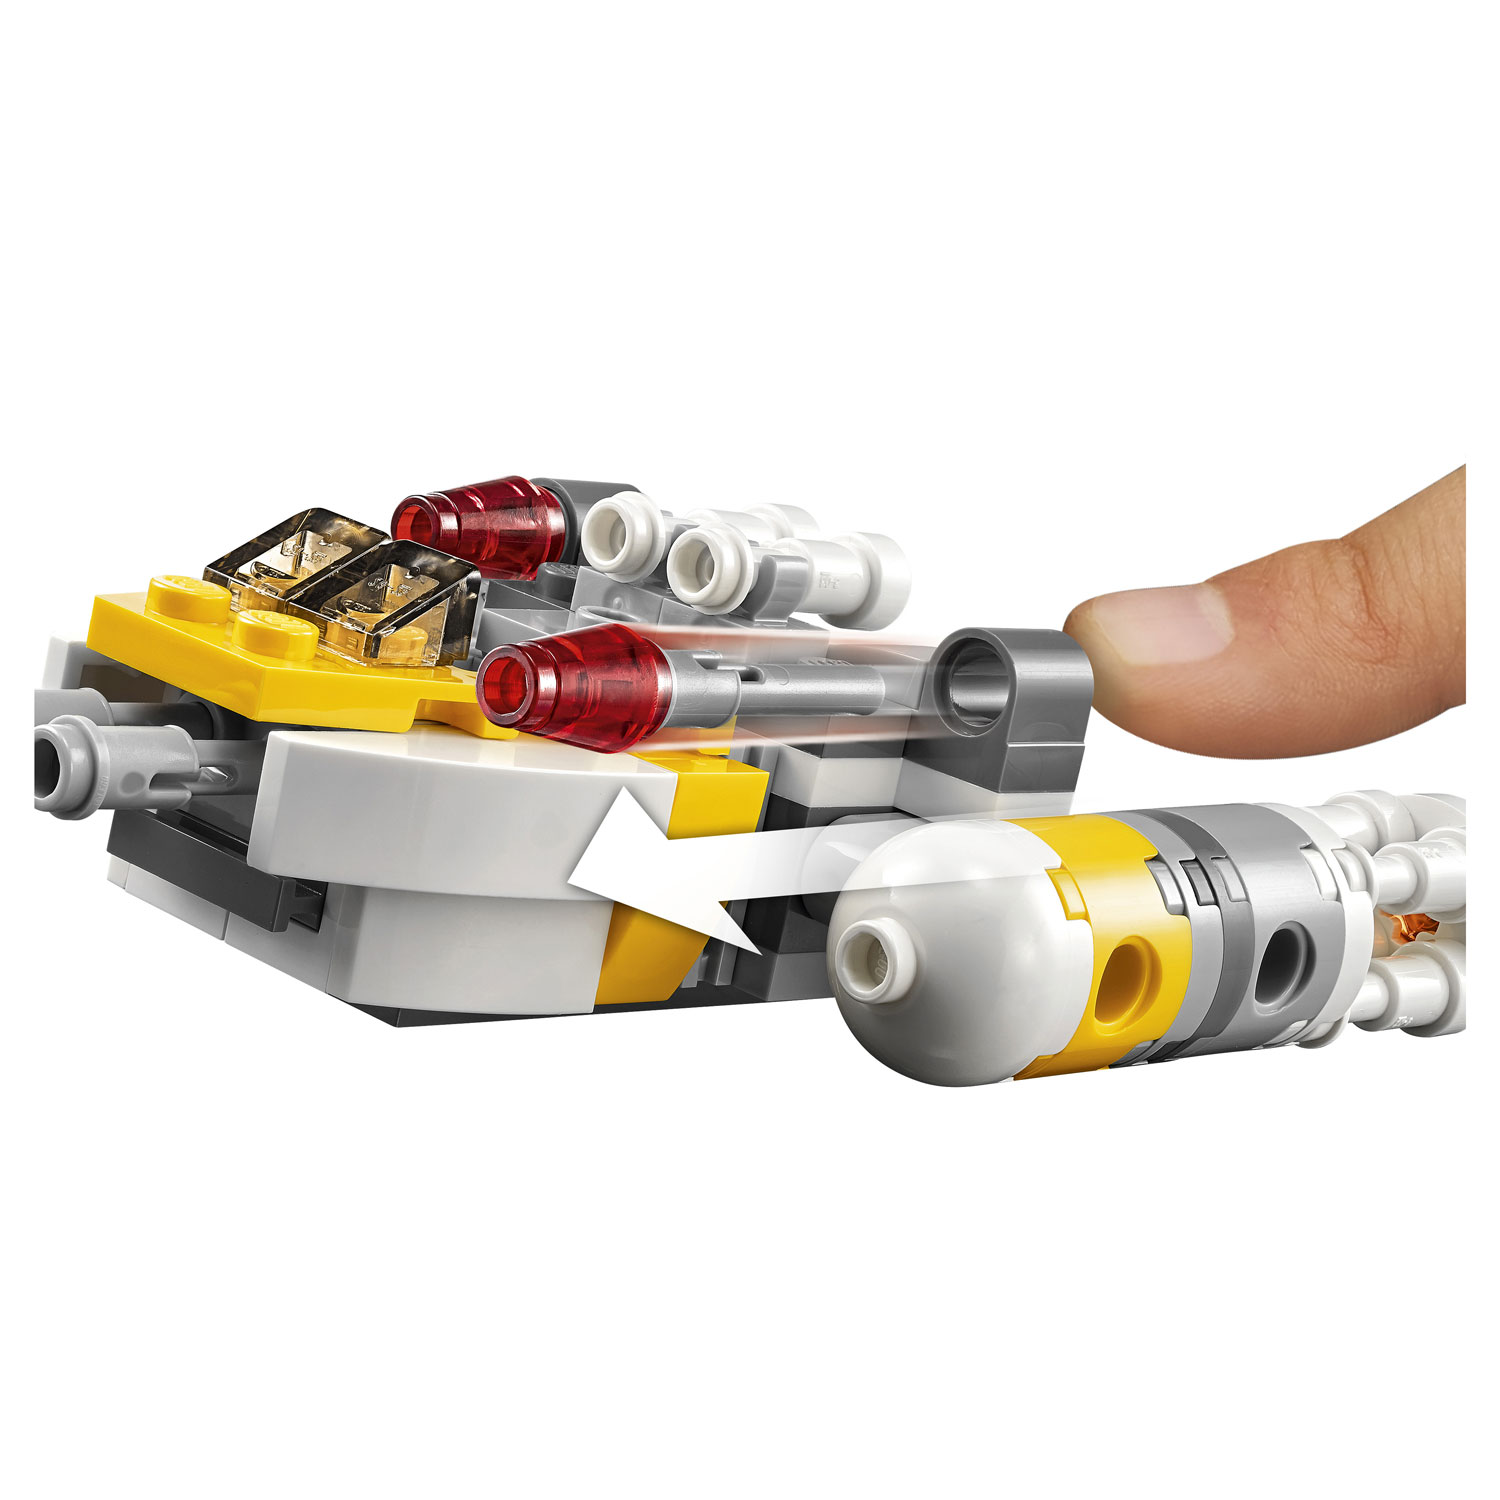 LEGO Star Wars 75162 Y-Wing Microfighter